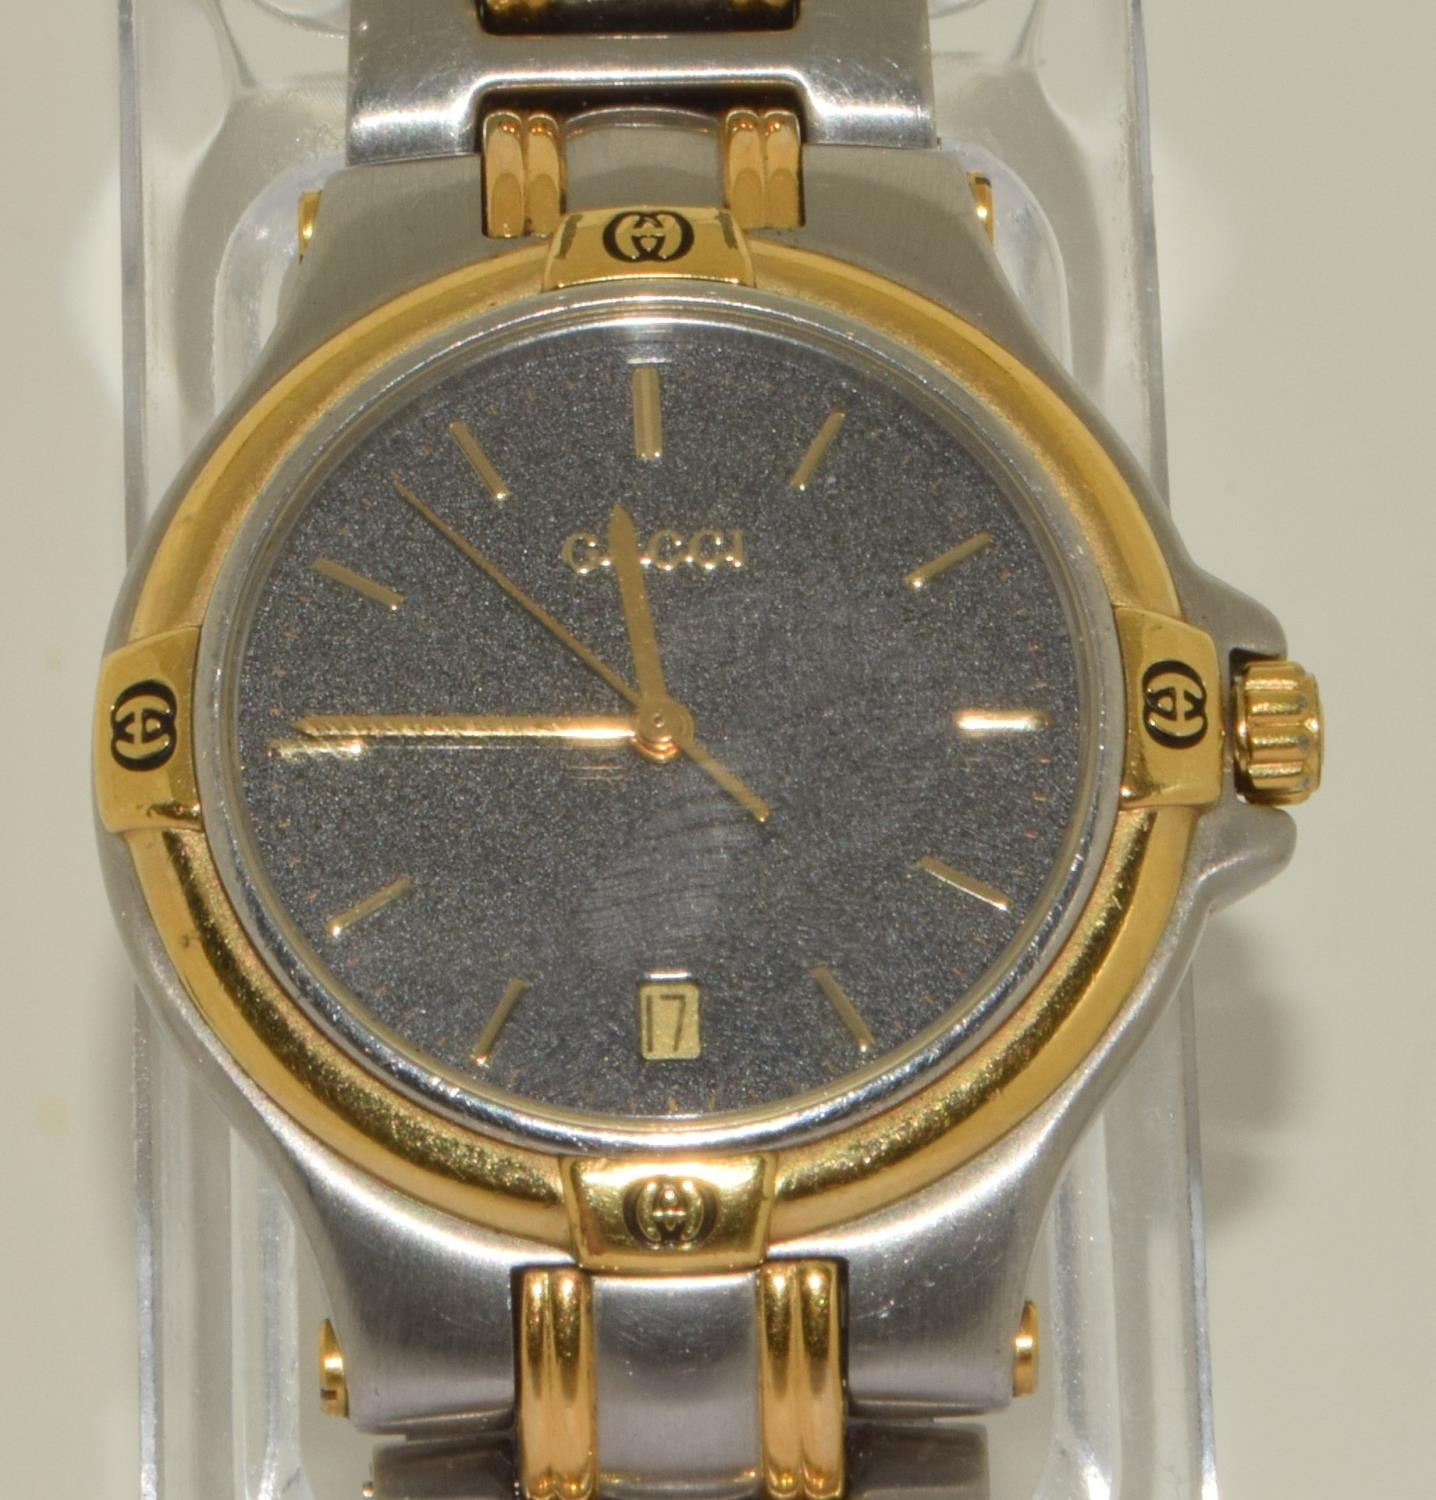 Gucci bi-metal 9040L analog display grey face watch boxed - Image 3 of 7